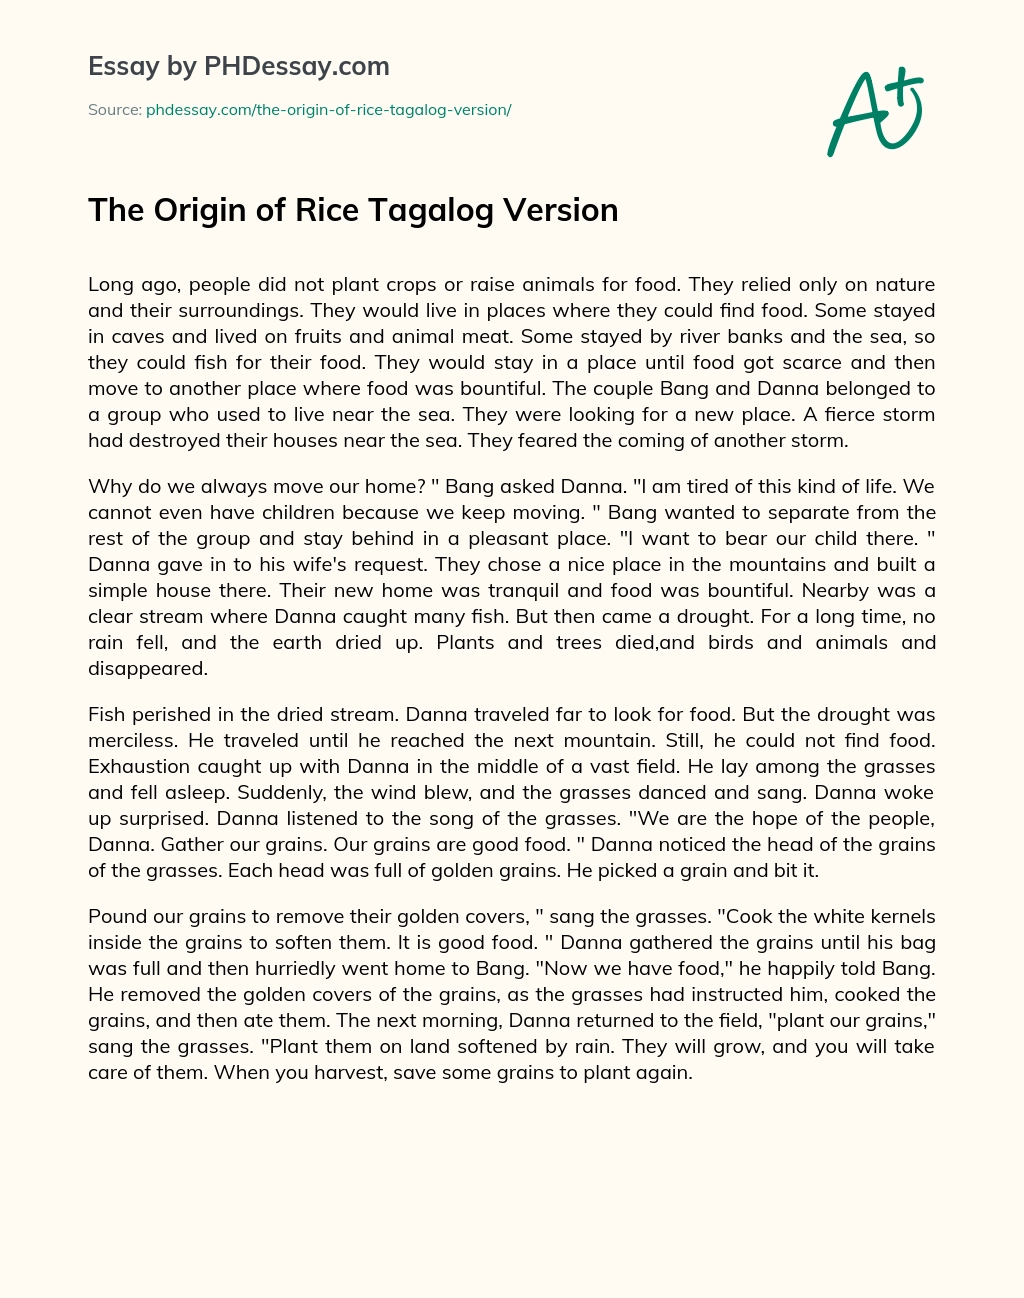 The Origin of Rice Tagalog Version essay